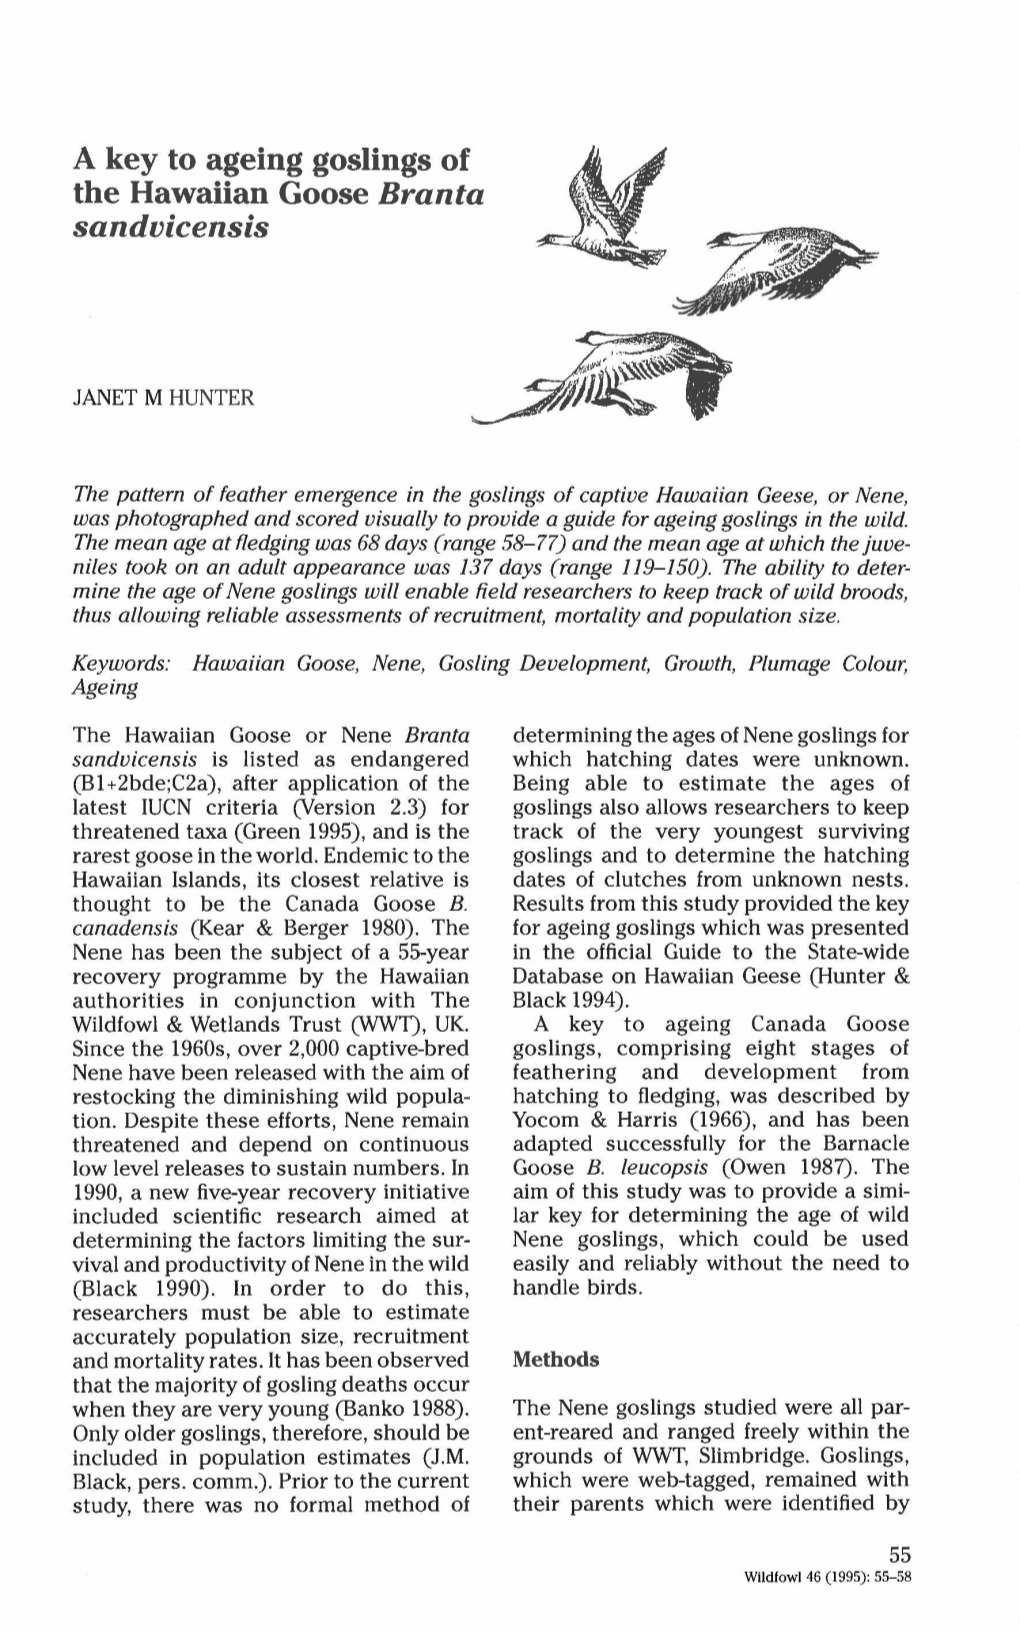 A Key to Ageing Goslings of the Hawaiian Goose Branta Sandvicensis